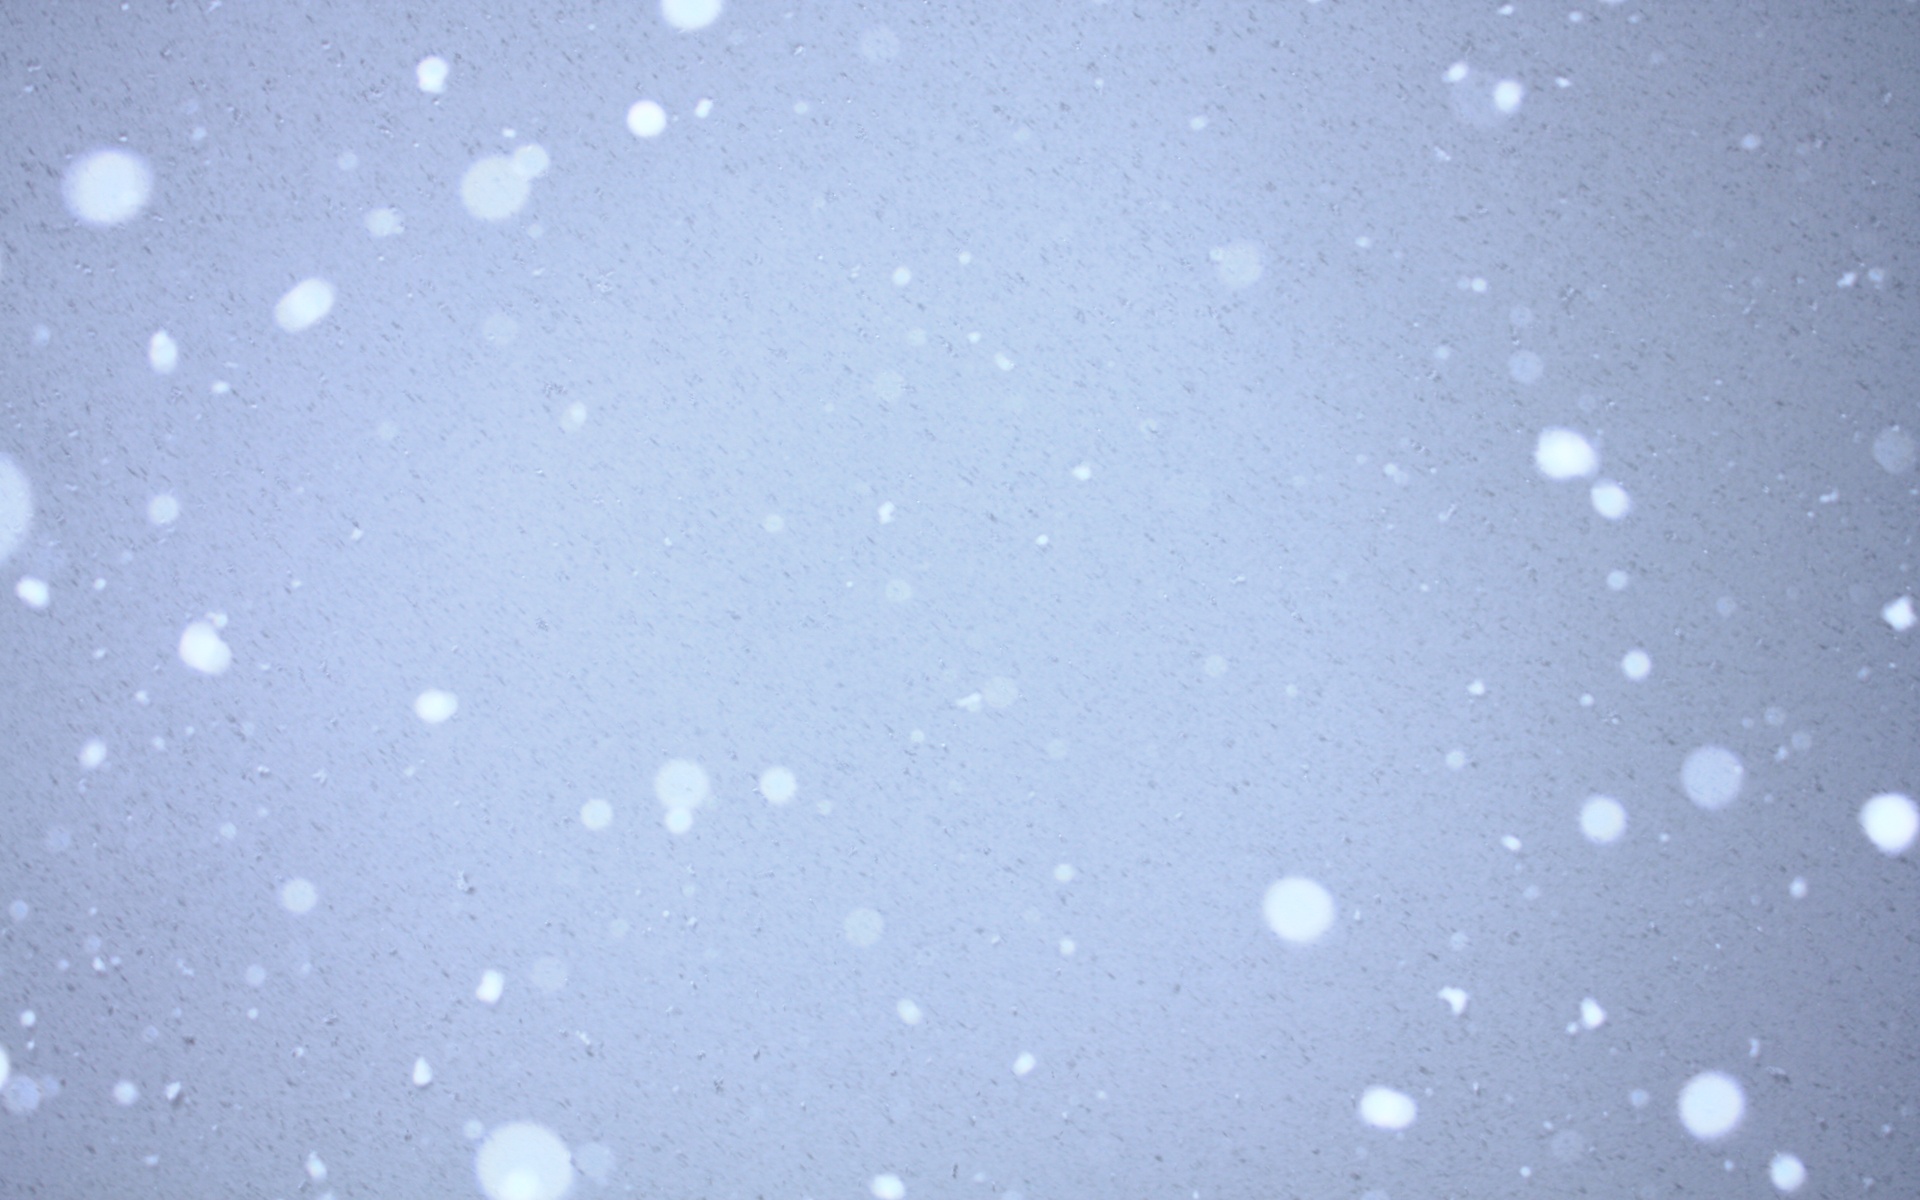 Wallpaper Of Snow Falling On Blue Sky